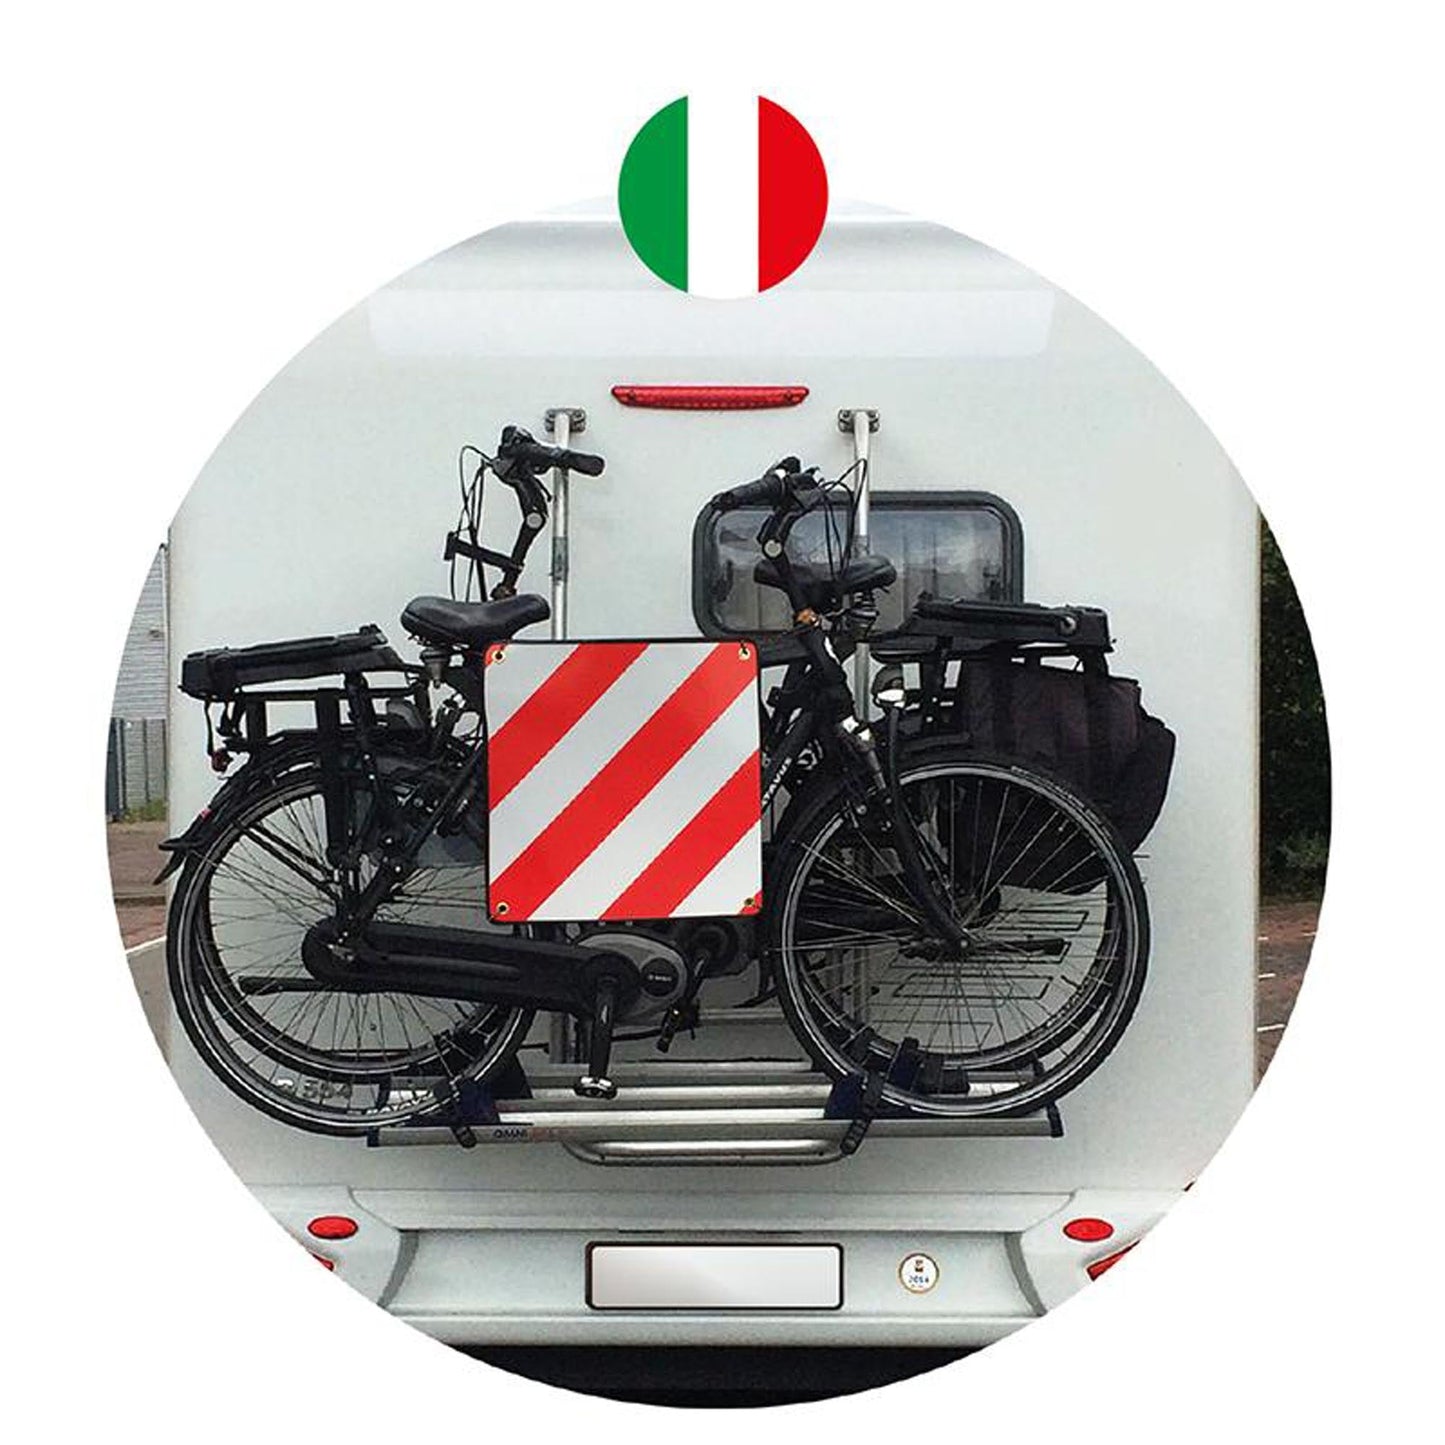 Alu-Warntafel 50x50cm für Italien/Spanien 2 in 1 - TMN-shop.de